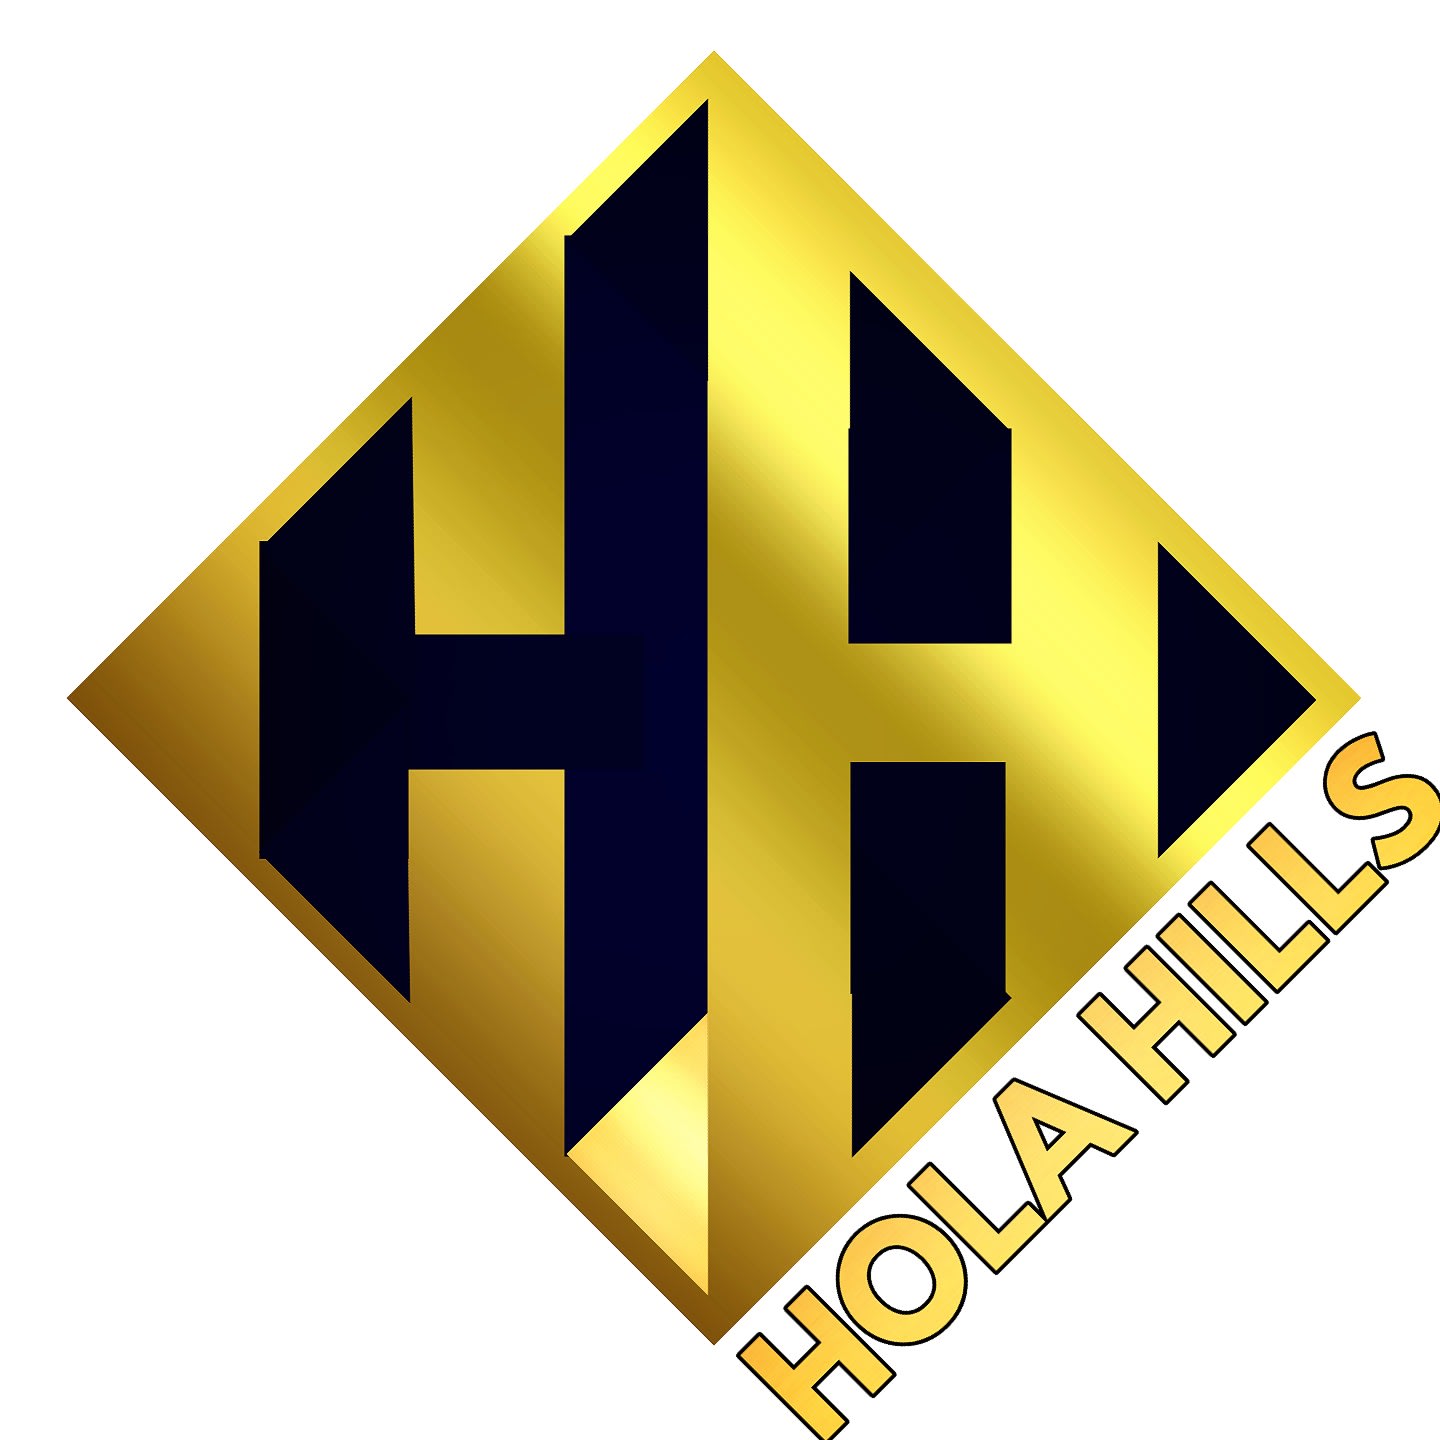 HOLA HILLS